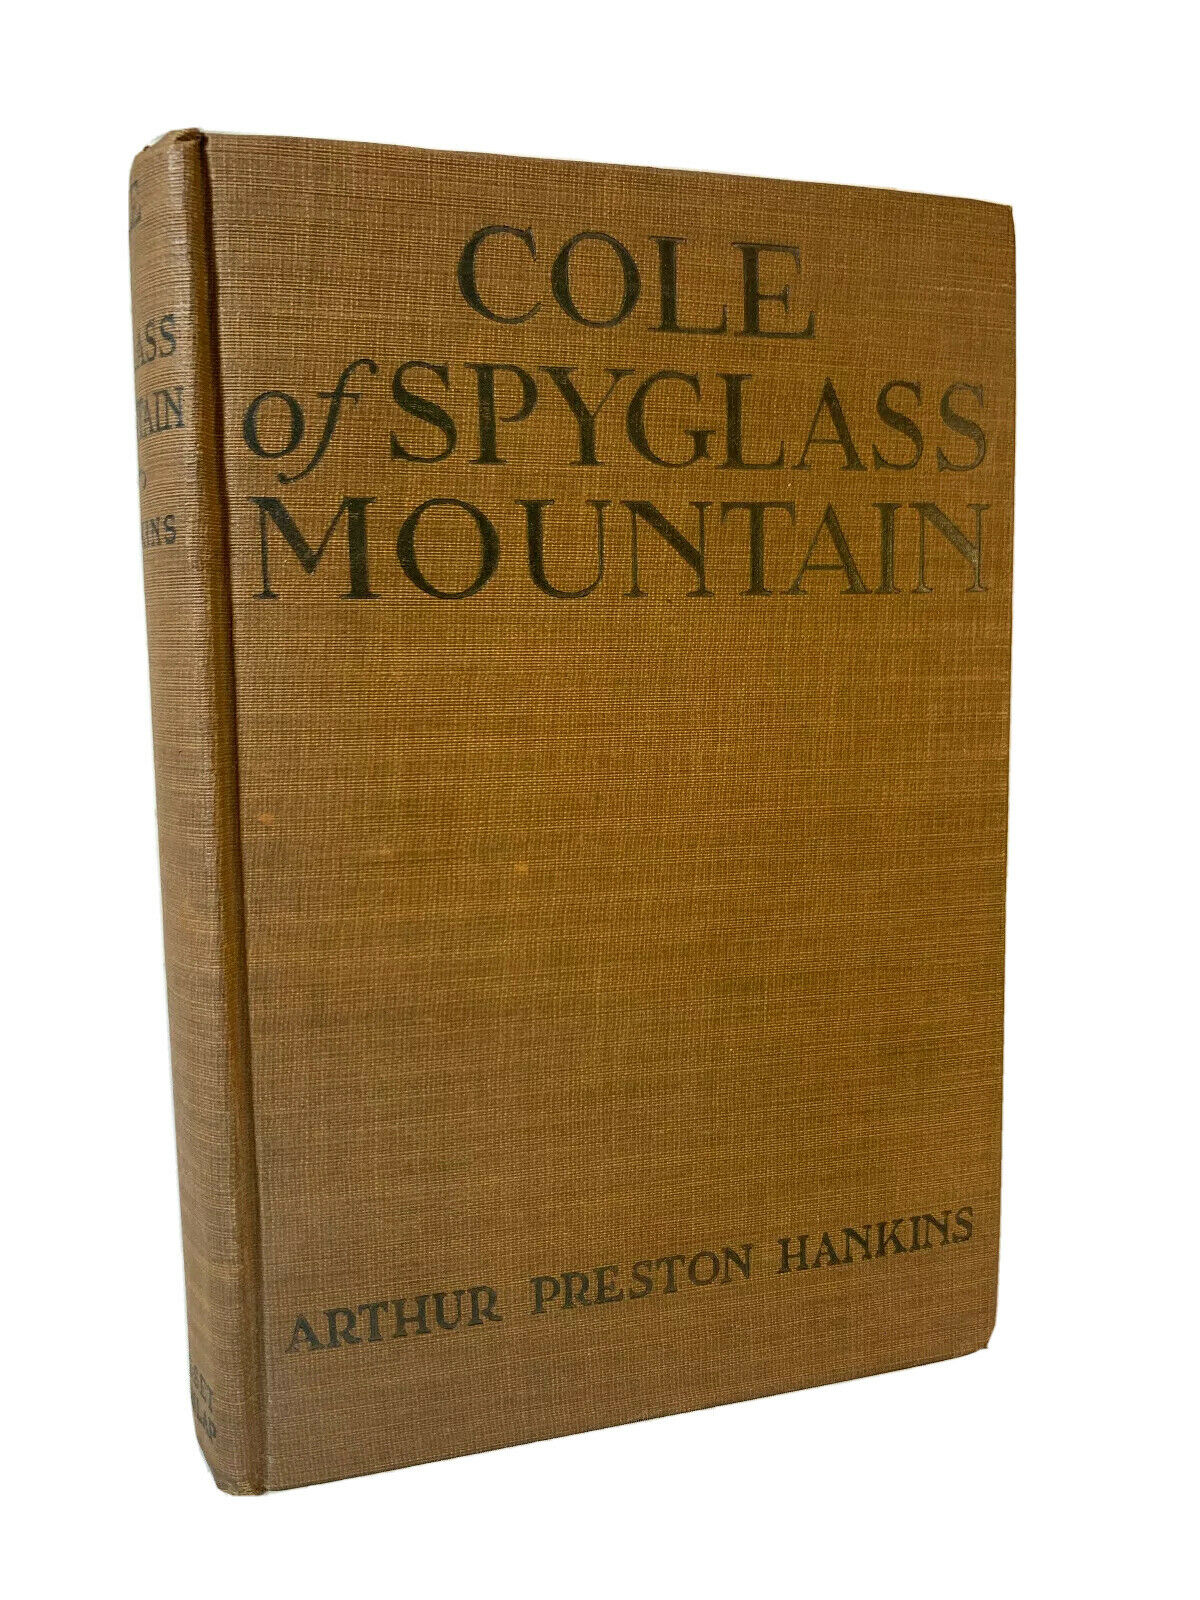 Cole of Spyglass Mountain Hankins, Arthur Preston (1923) K2